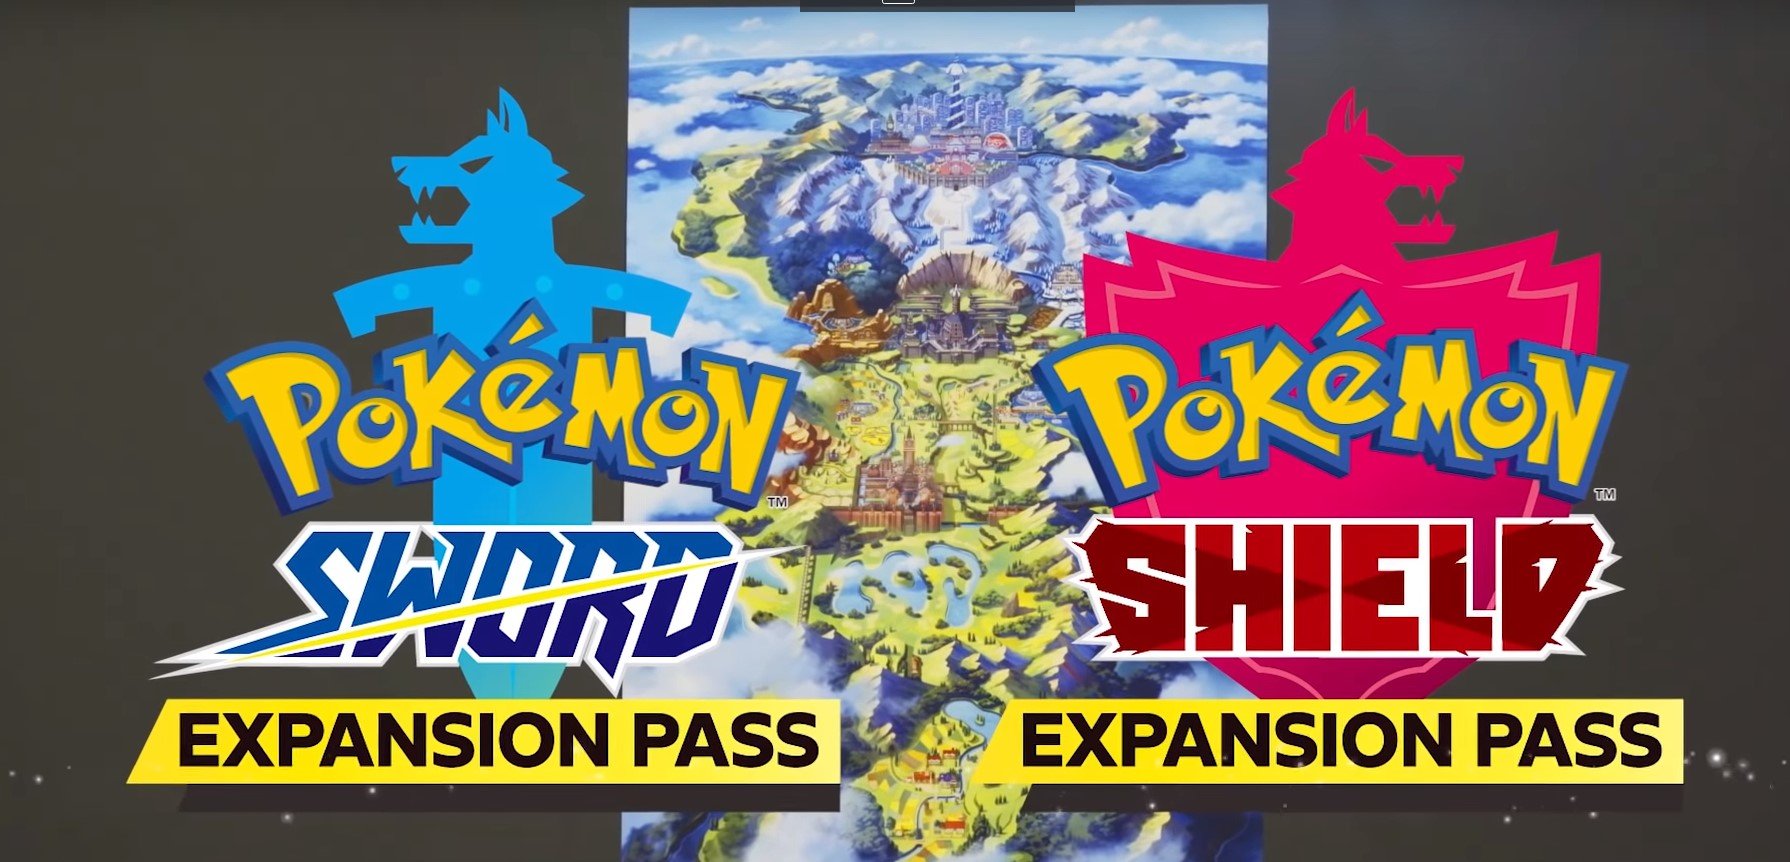 Buy Pokémon Shield + Pokémon Shield Expansion Pass from the Humble Store